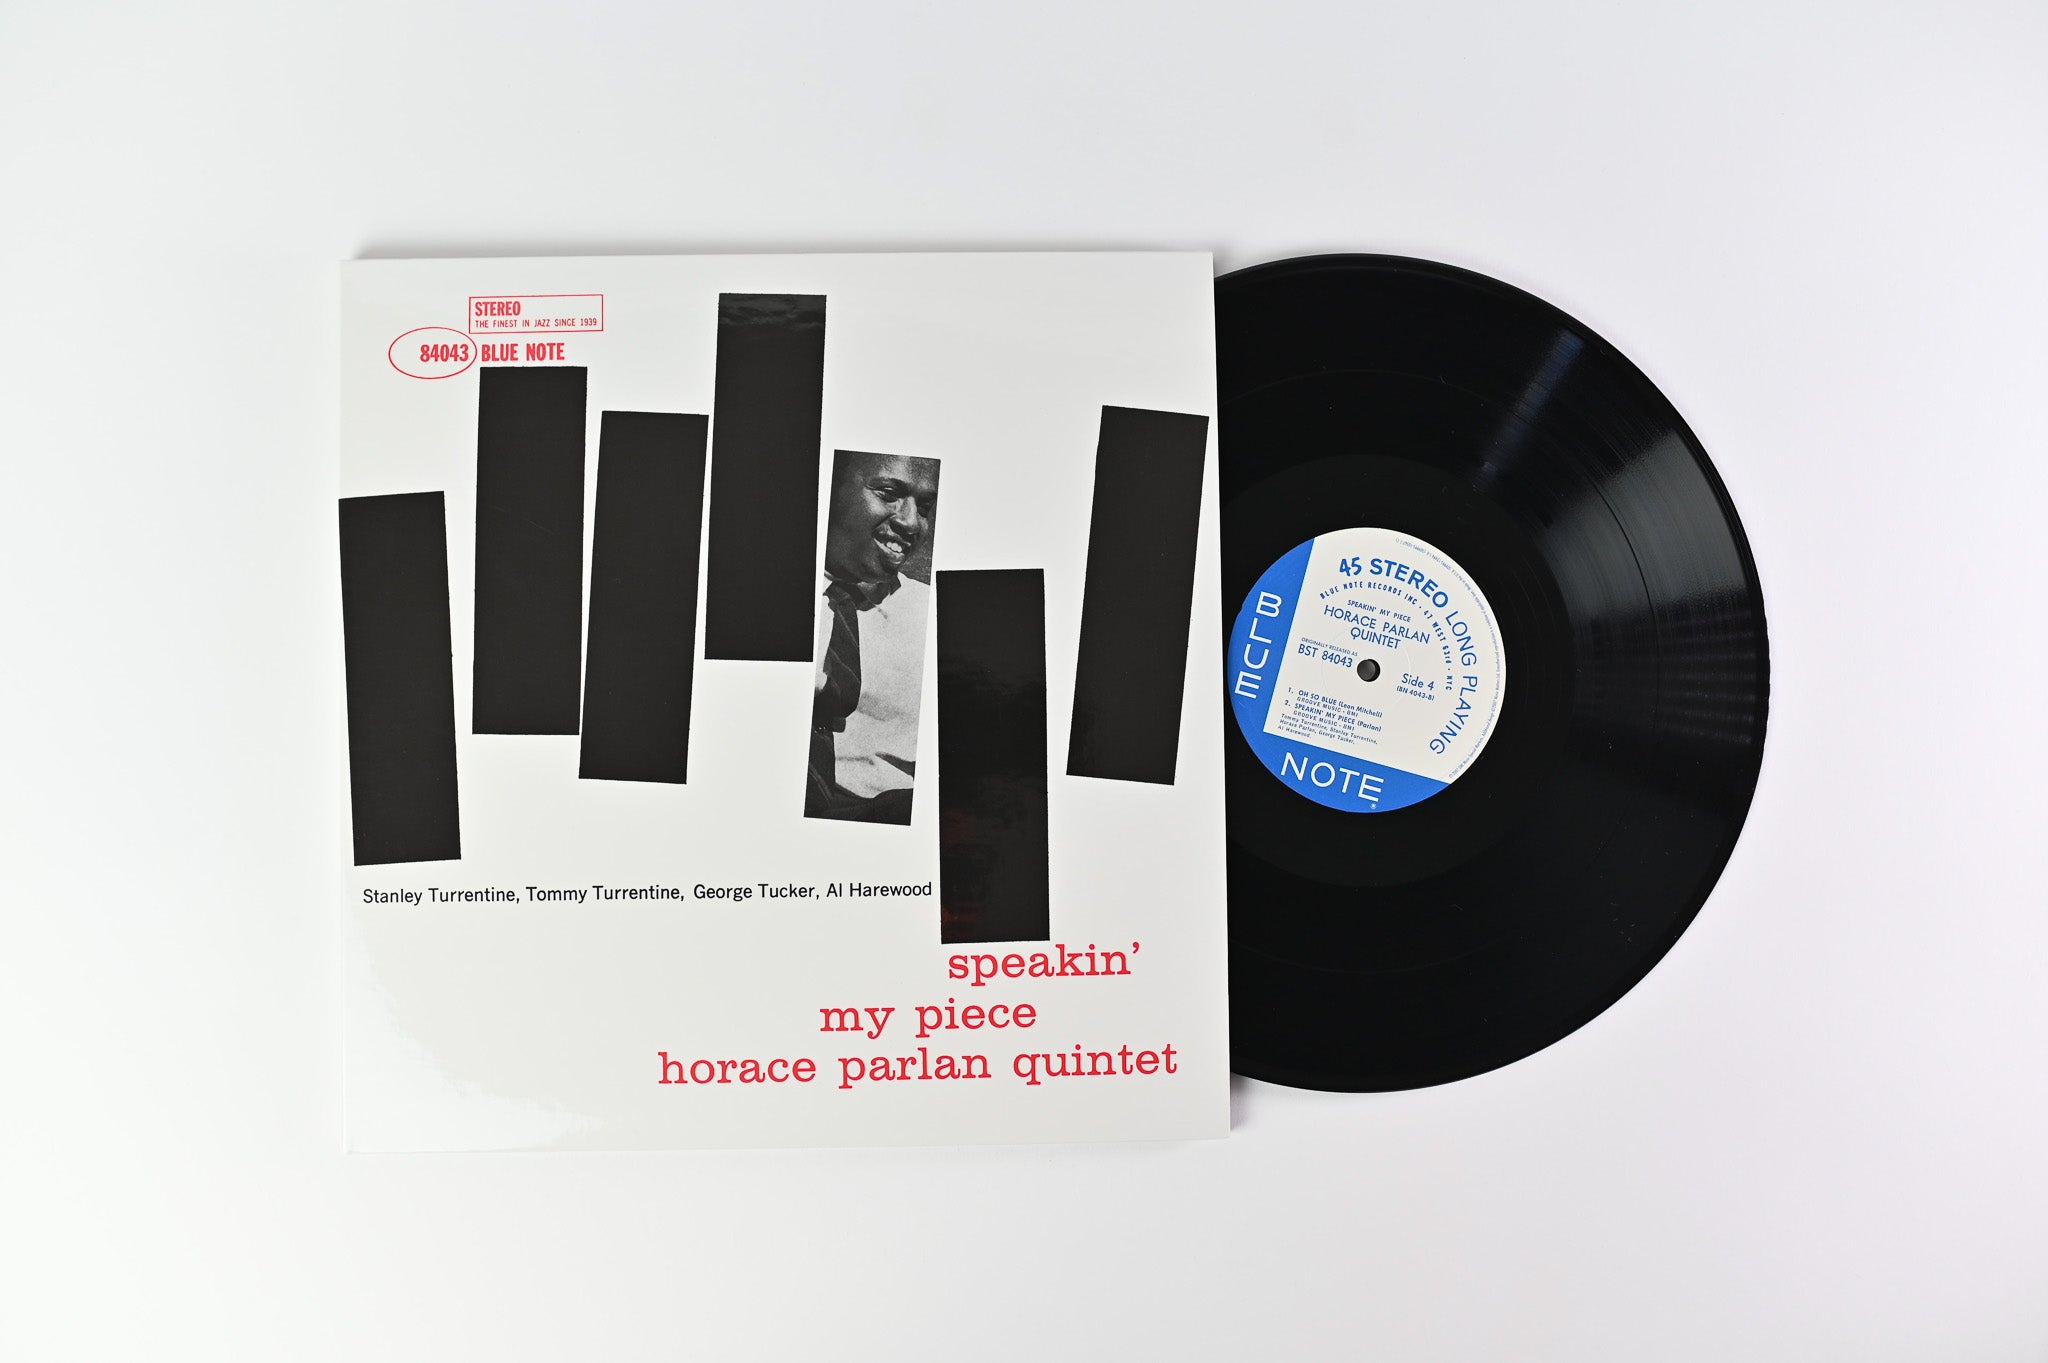 Horace Parlan Quintet - Speakin' My Piece on Blue Note Music Matters Ltd 45 RPM Reissue